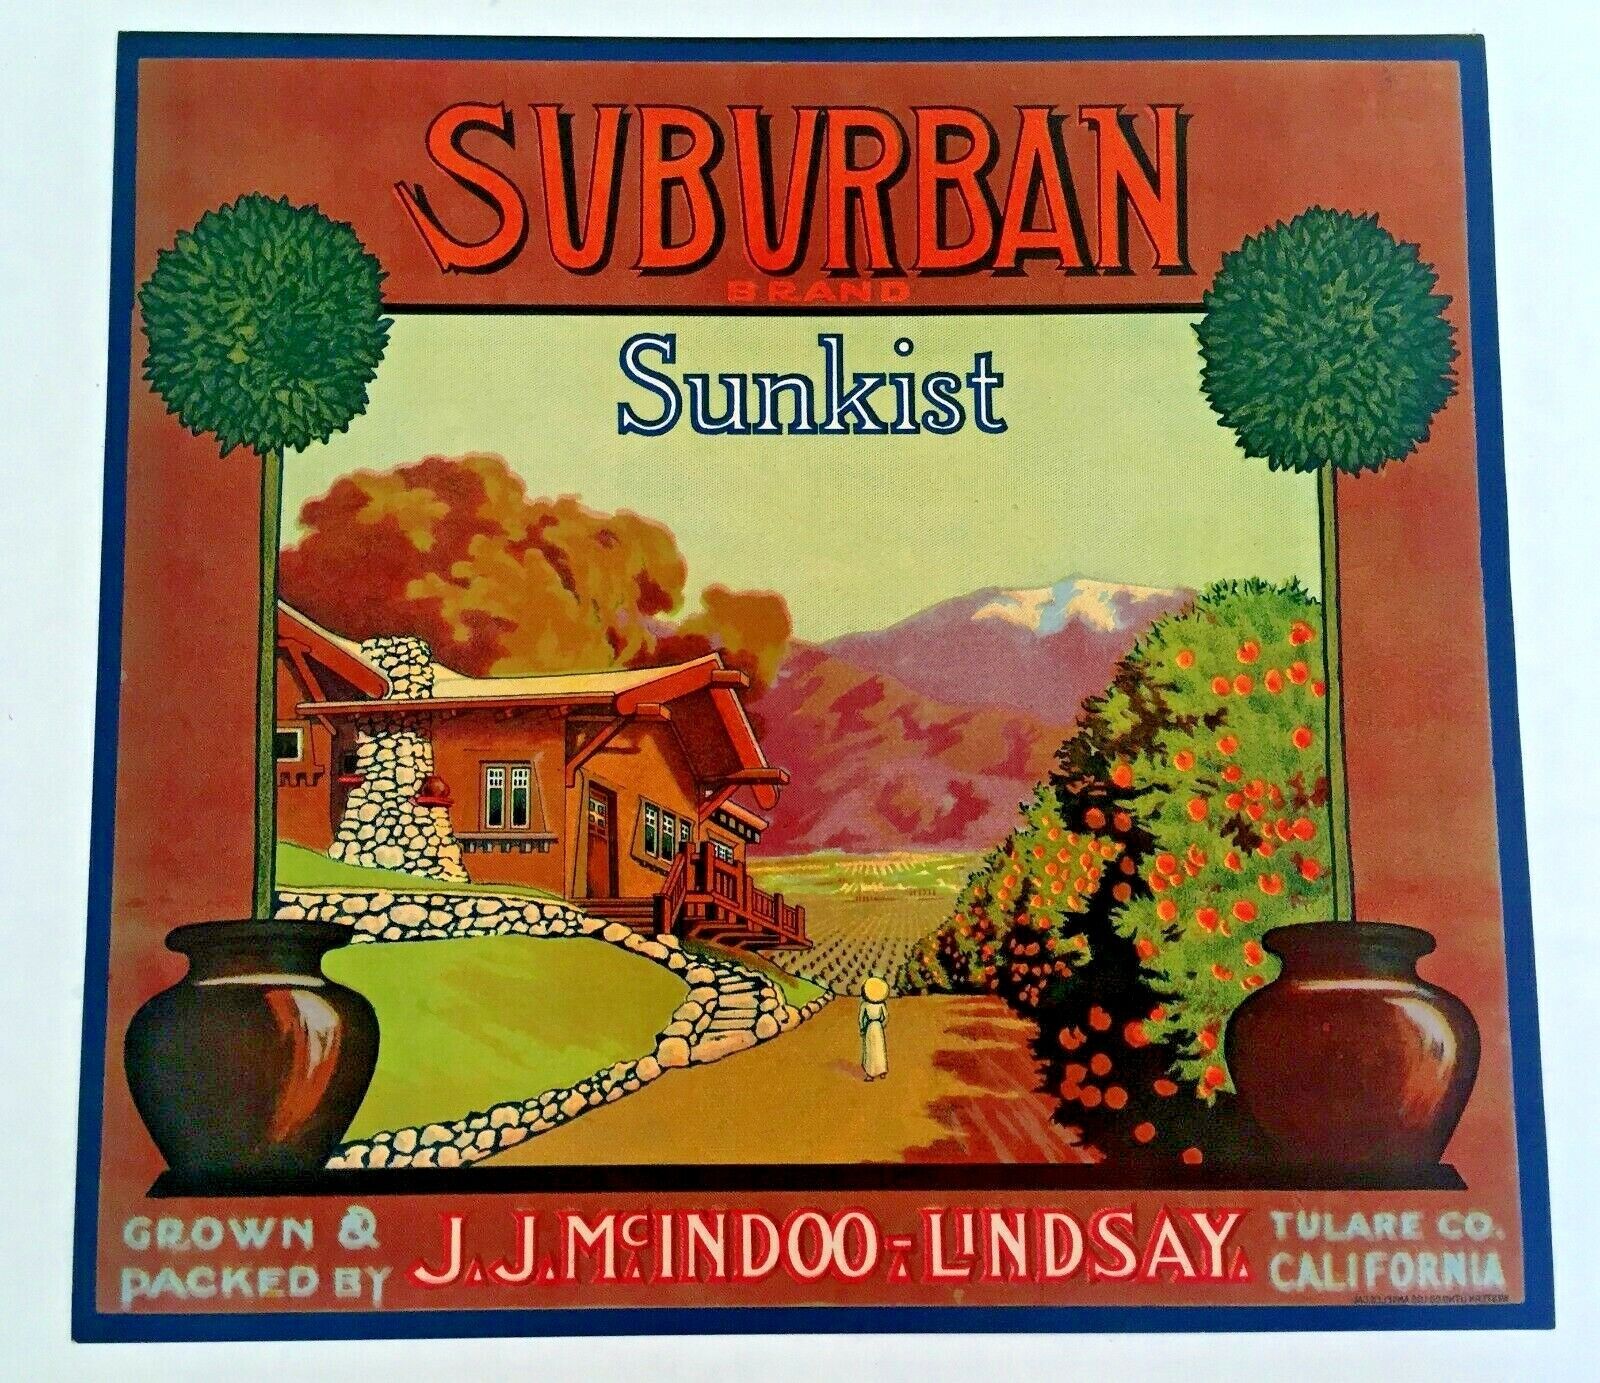 Rare 1920s Suburban Sunkist Orange Crate Label Image of Craftsman Style House